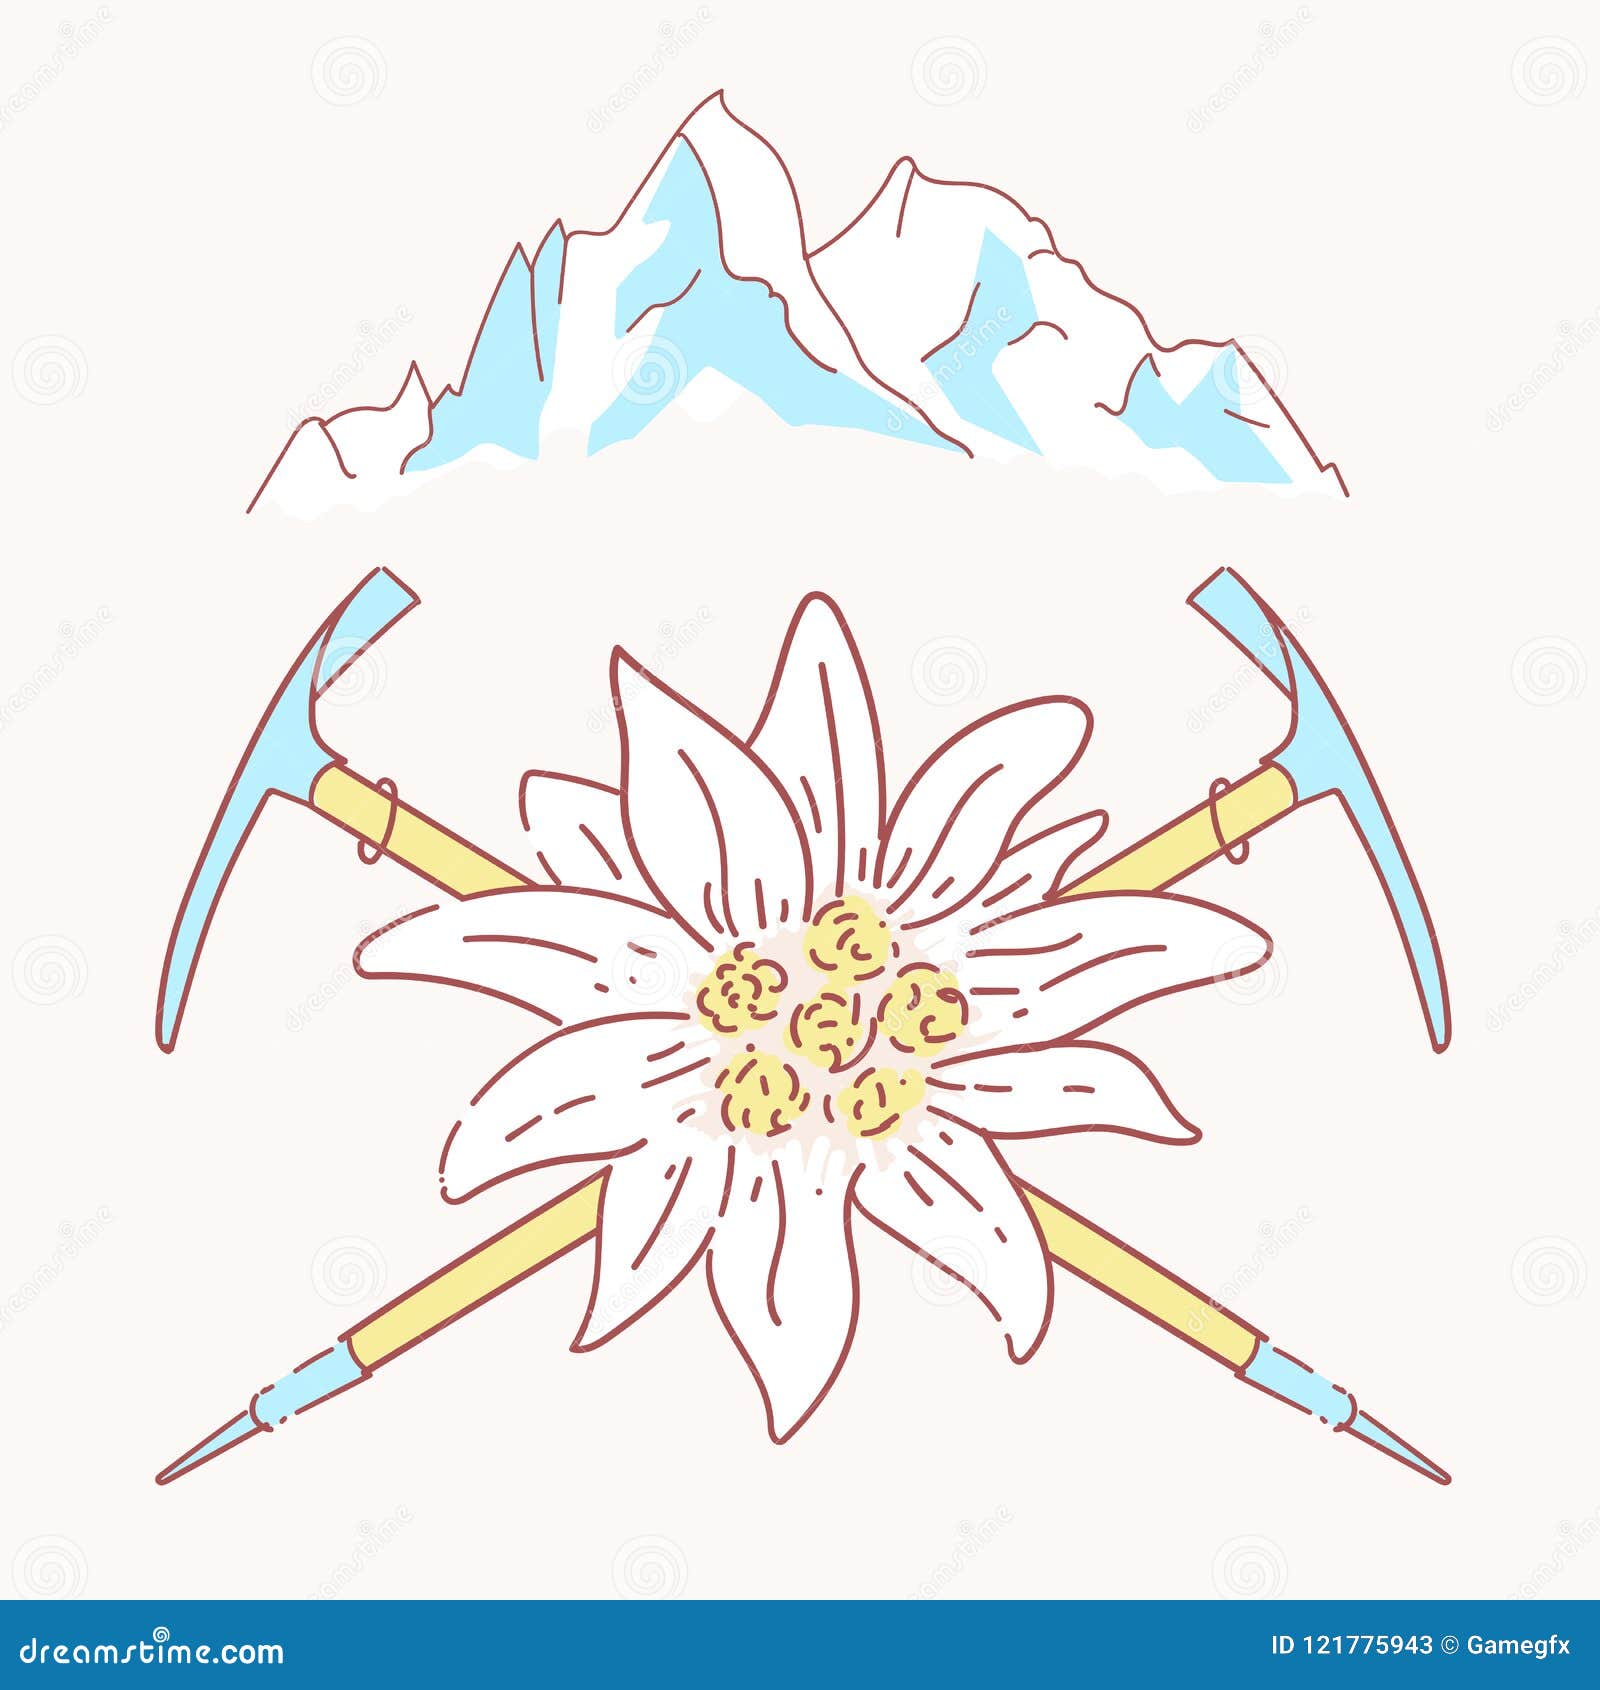 edelweiss alpenstock mountains flower  alpinism alps germany logo